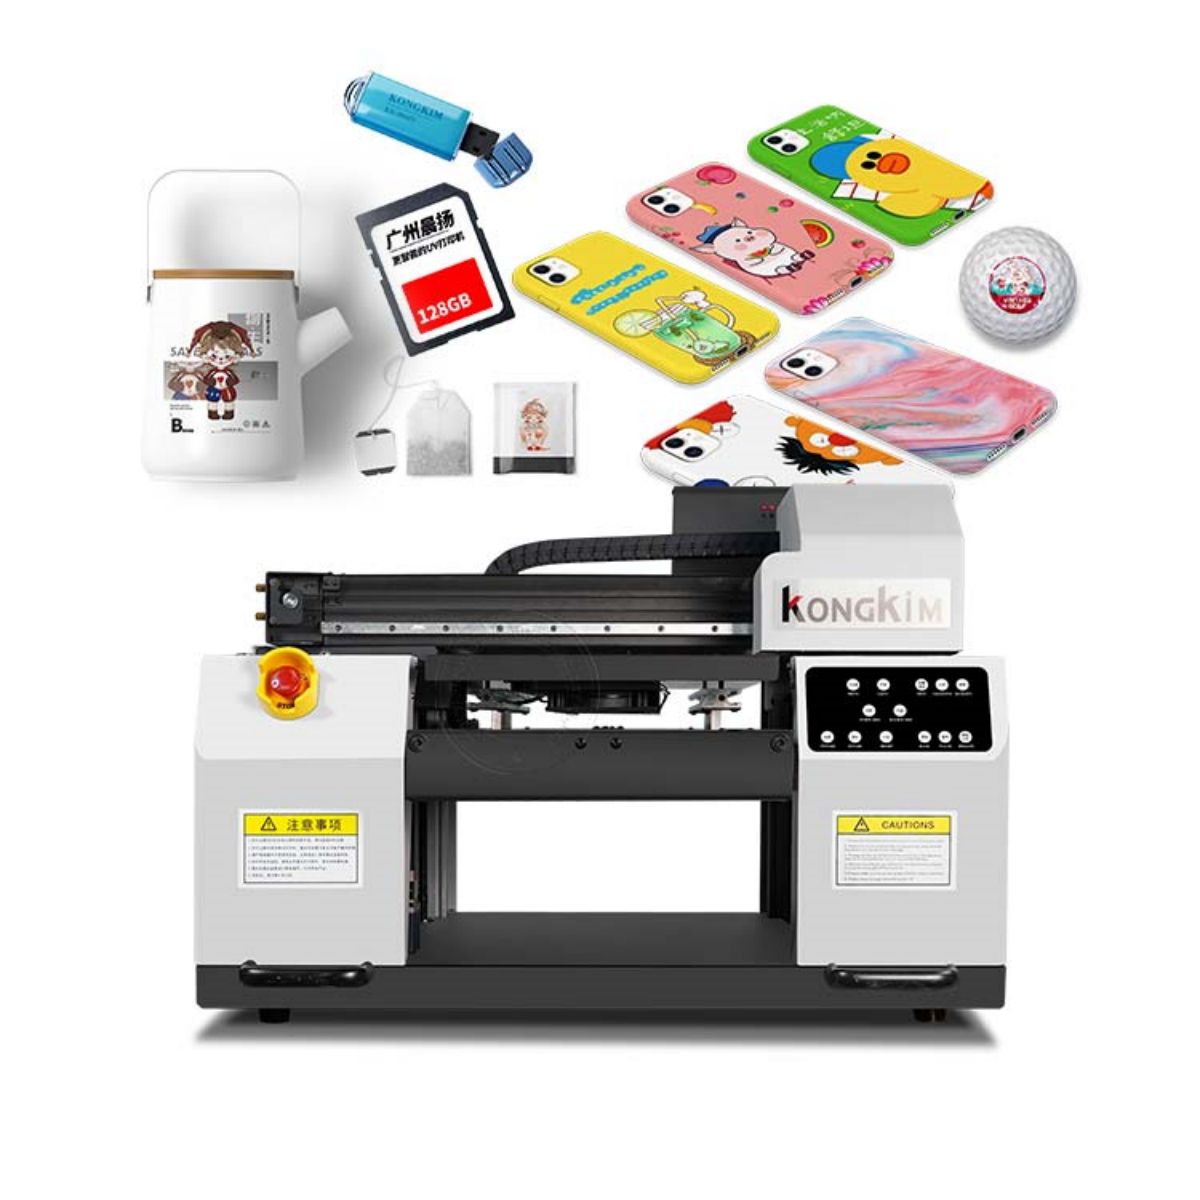 Kongkim UV Printer Operation Process, Printing Applications, Advantages!